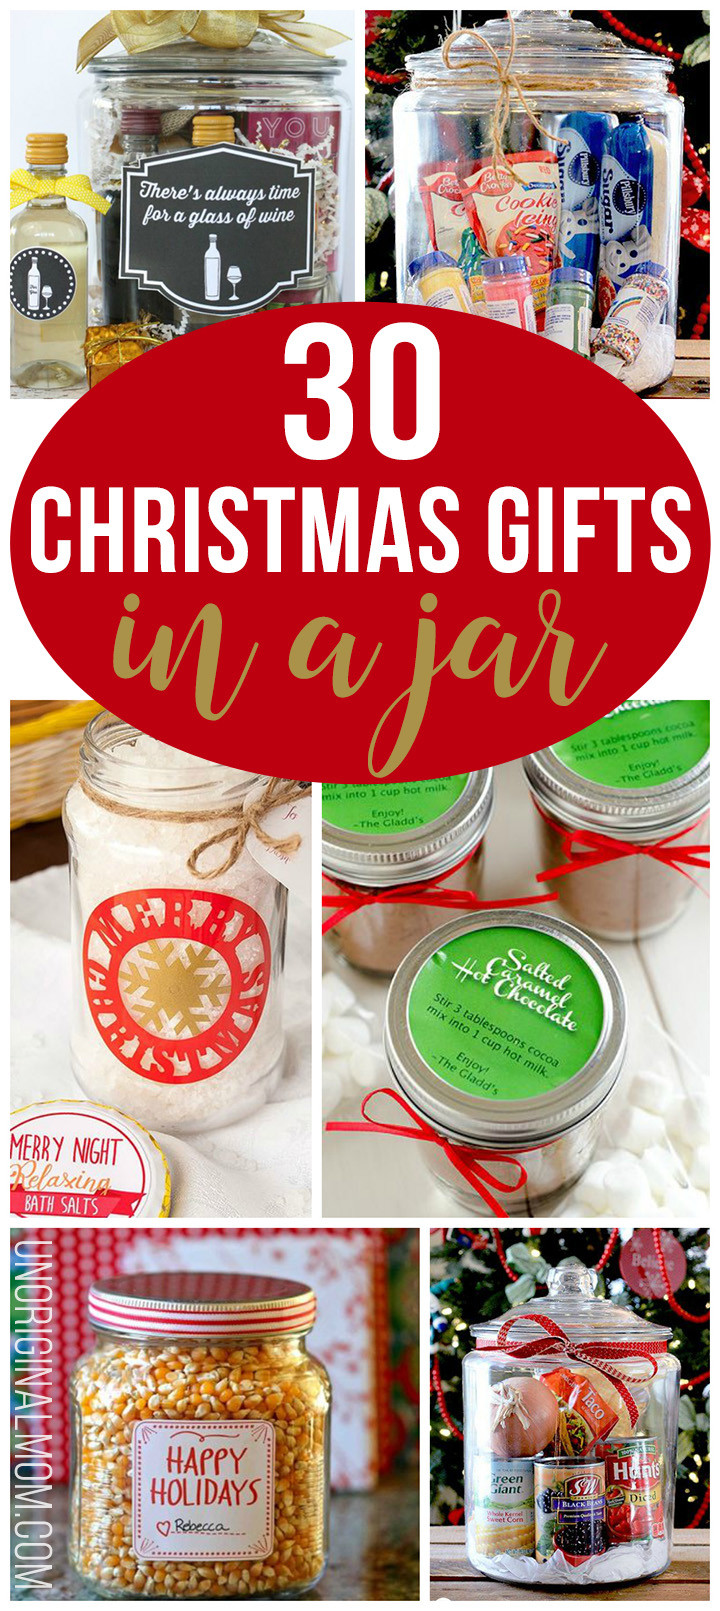 Cool DIY Christmas Gifts
 30 Christmas Gifts in a Jar unOriginal Mom